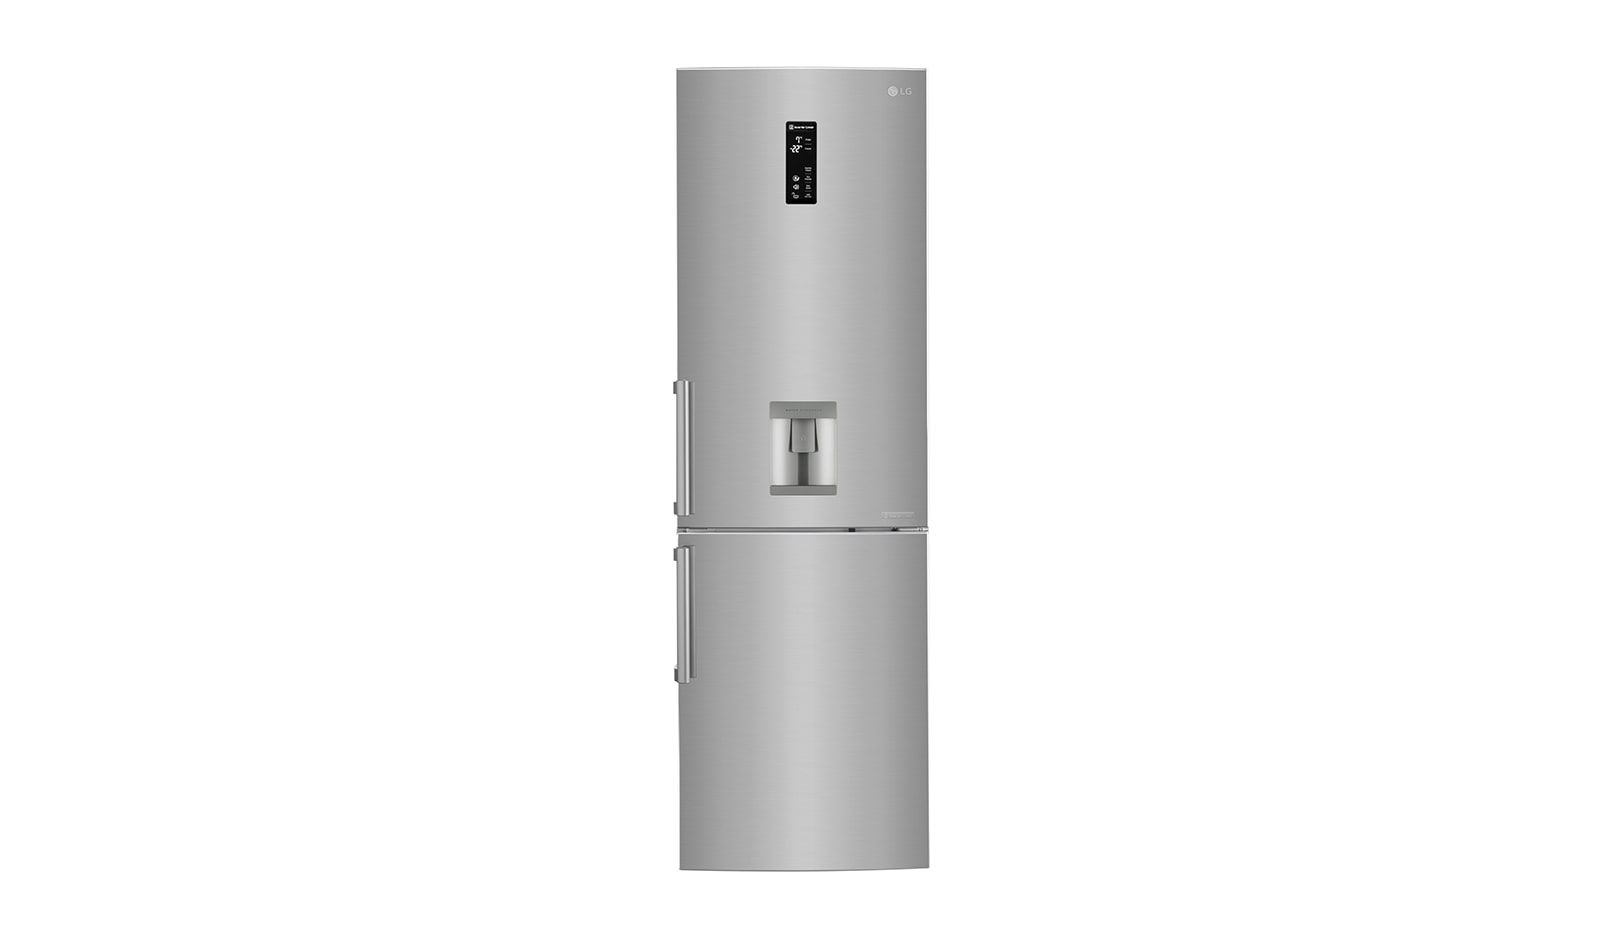 Двухкамерный холодильник lg no frost. Холодильник Electrolux en 3486 mox. Холодильник Electrolux en 3854 mfx. Холодильник Haier c3f532cmsg. Холодильник Лджи двухкамерный ноу Фрост.